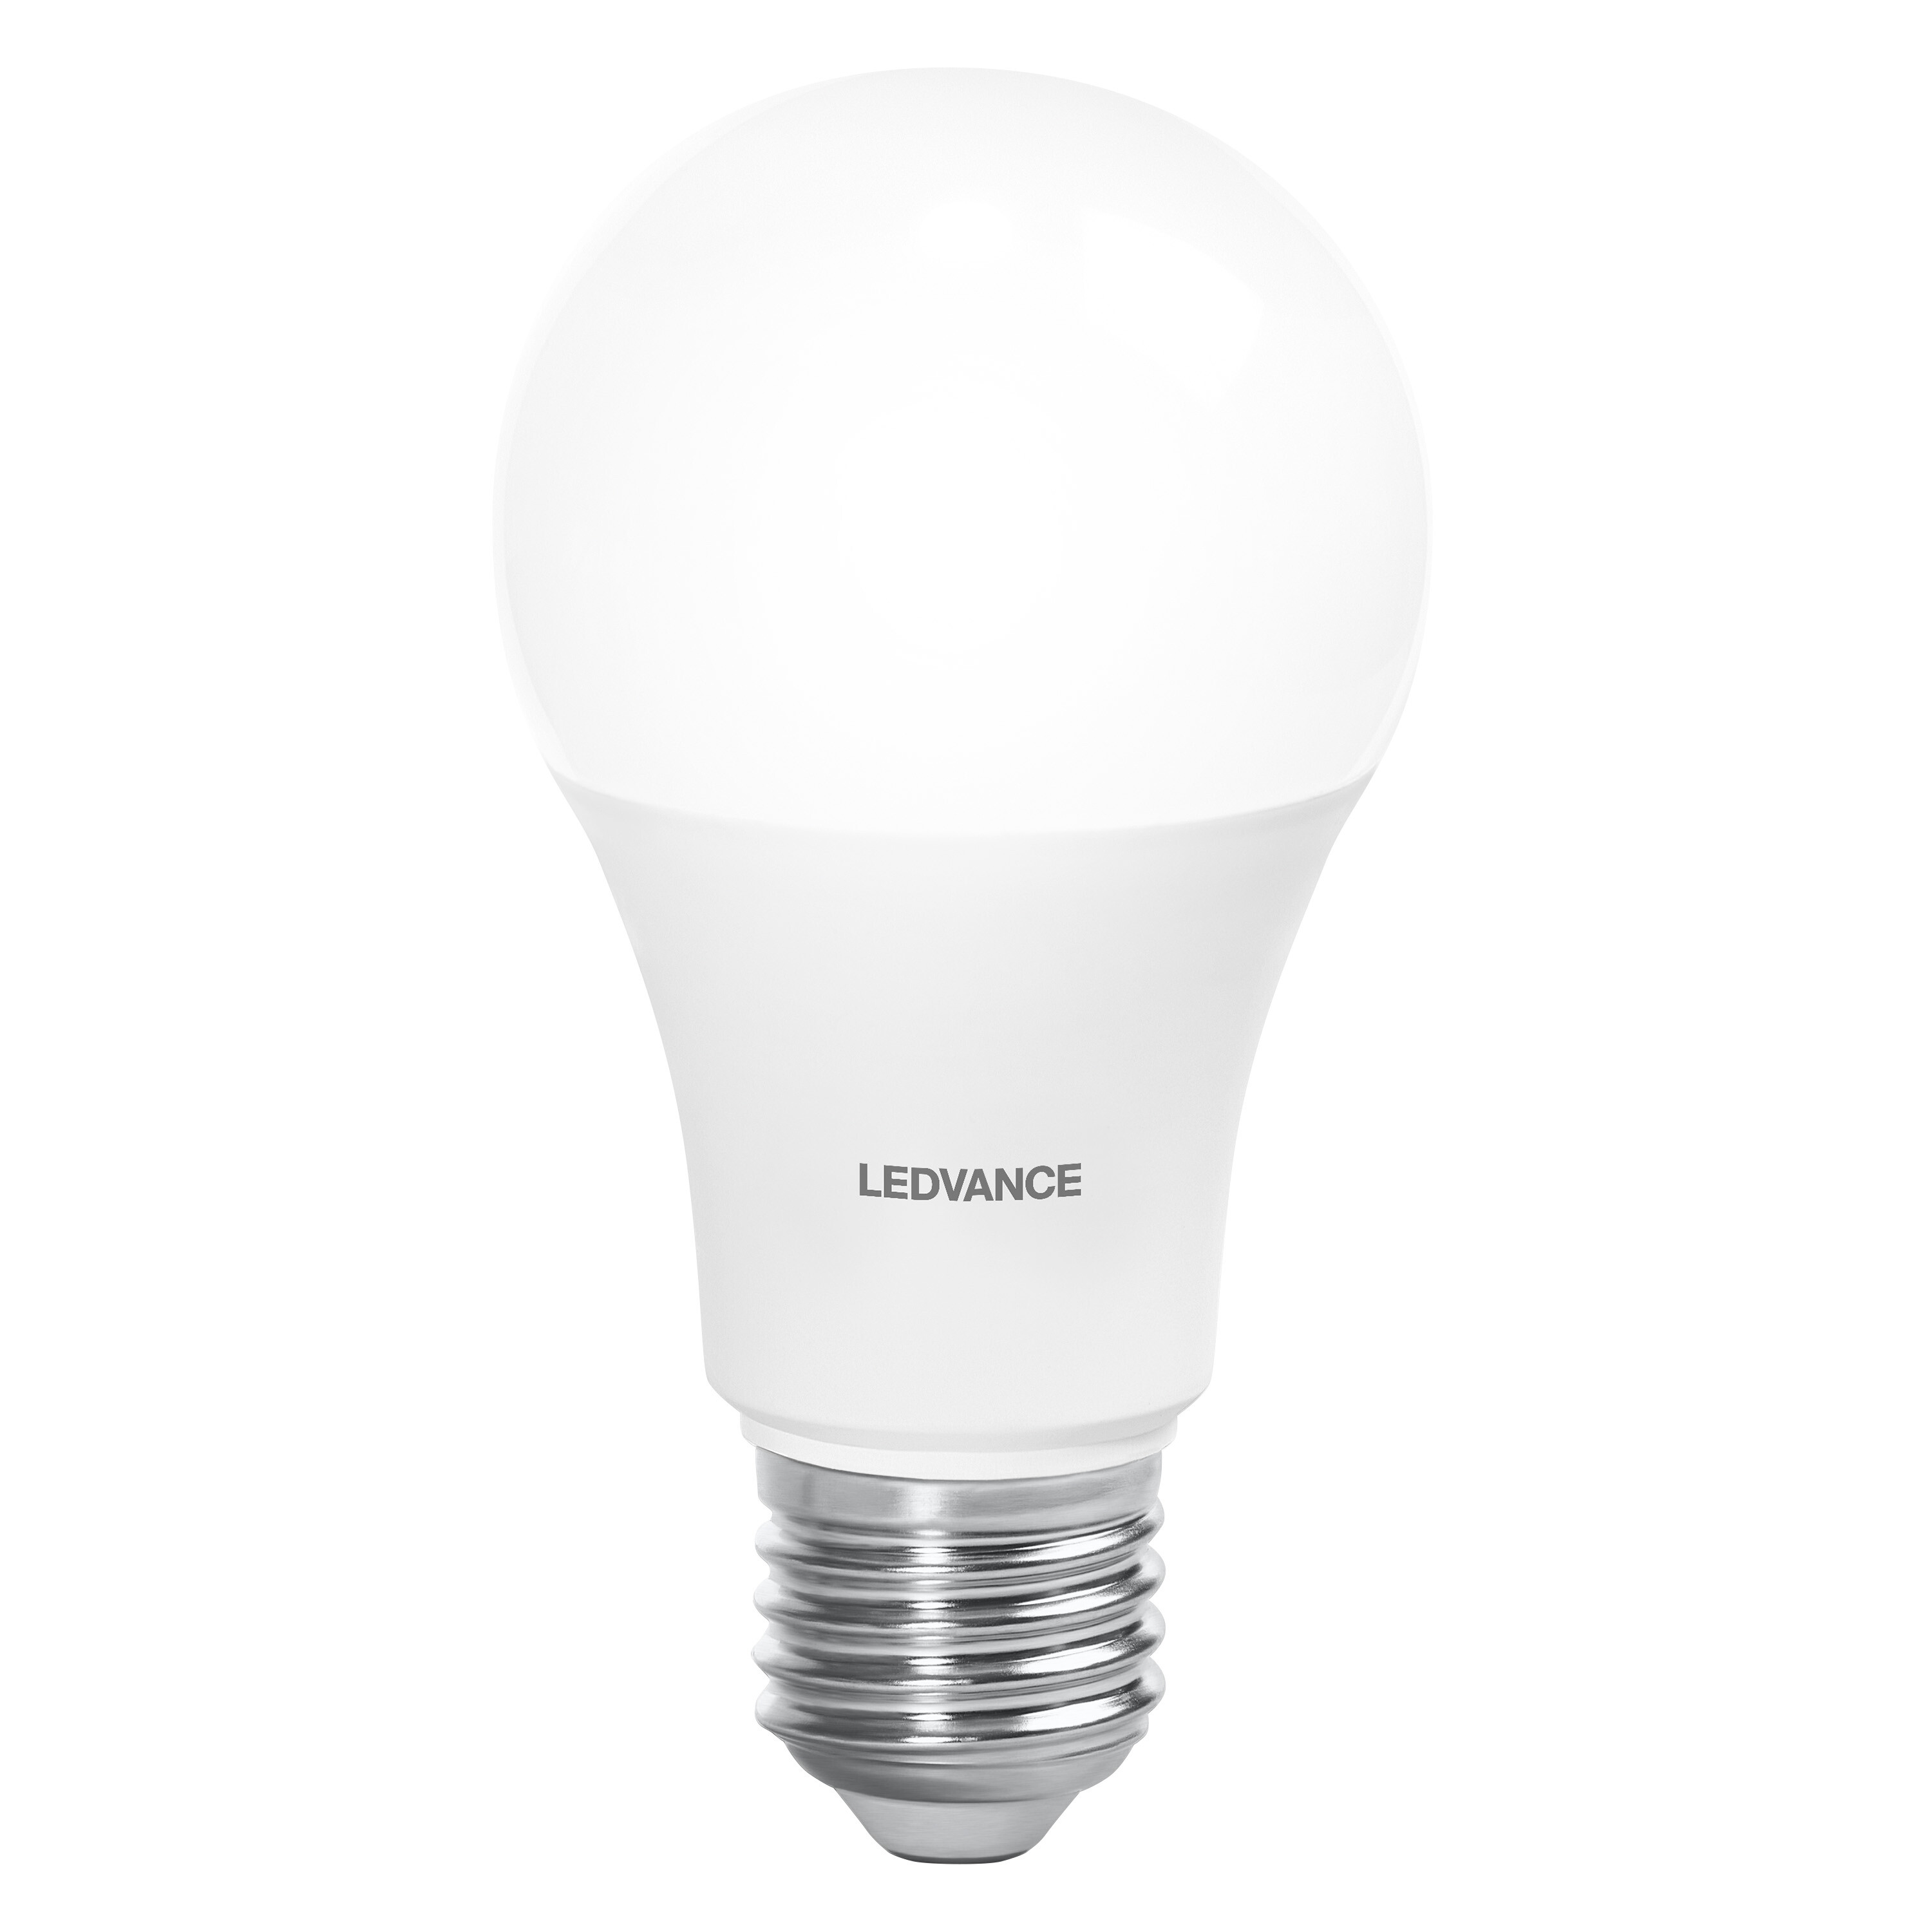 LED änderbar lumen Lamps Lampe 750 LEDVANCE SunHome Lichfarbe